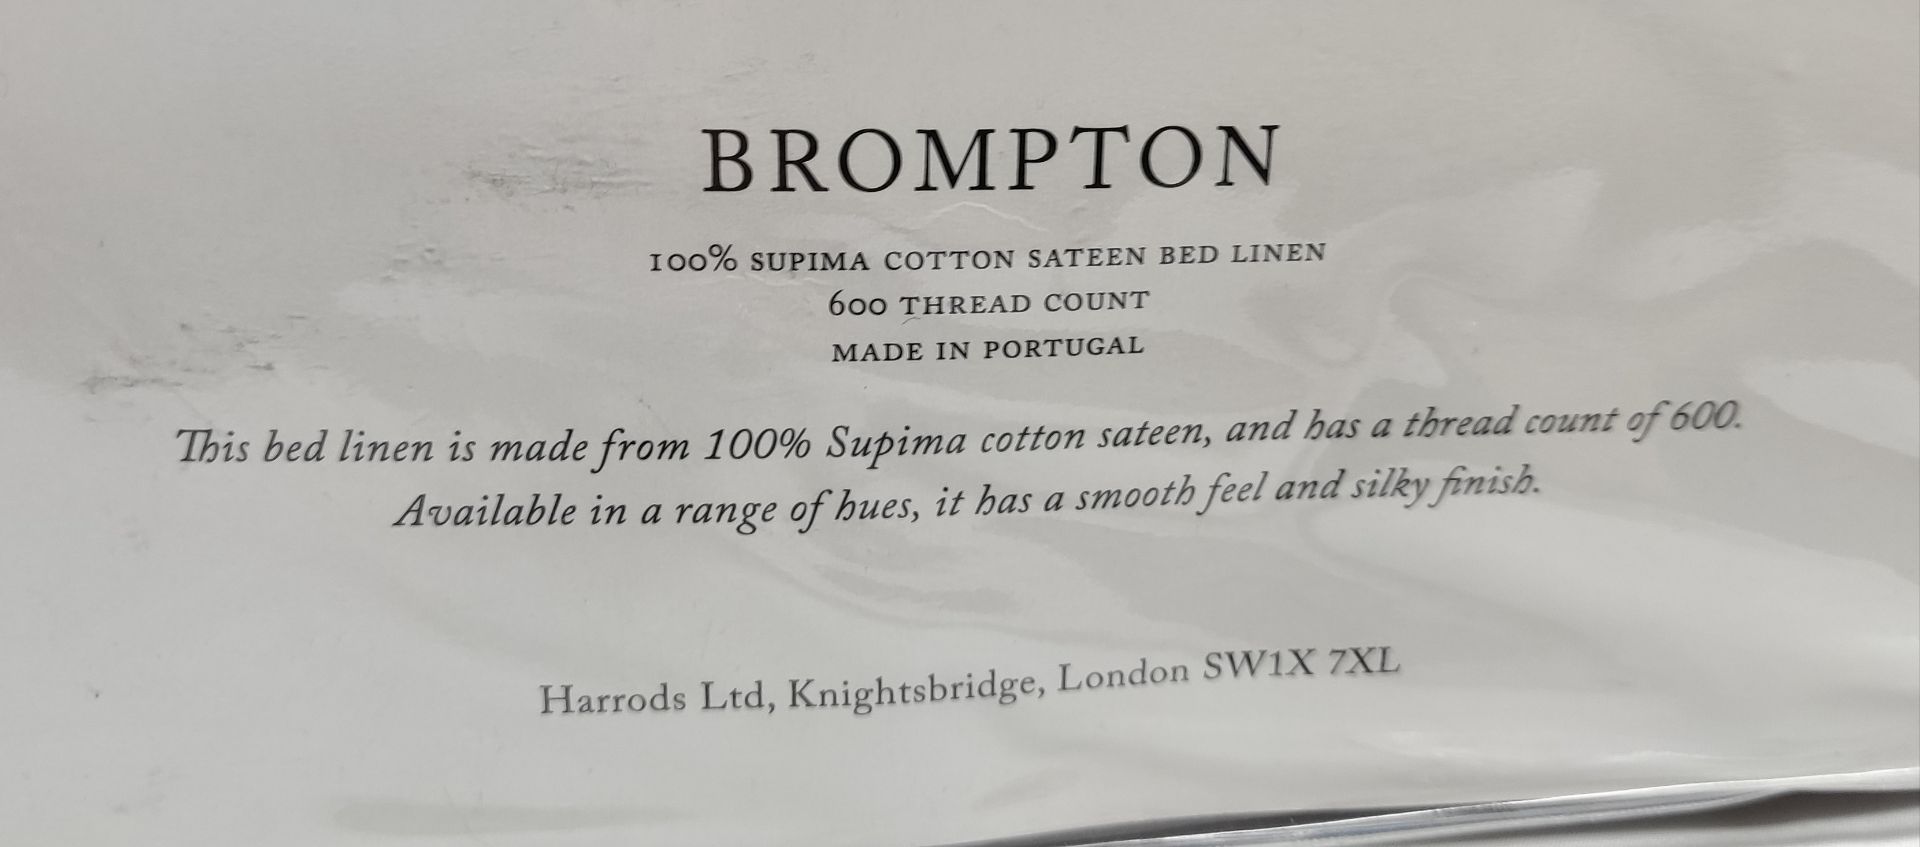 1 x HARRODS OF LONDON Brompton King Flat Sheet (275cm X 275cm) - Grey - Original RRP £279 - Ref: - Image 6 of 11